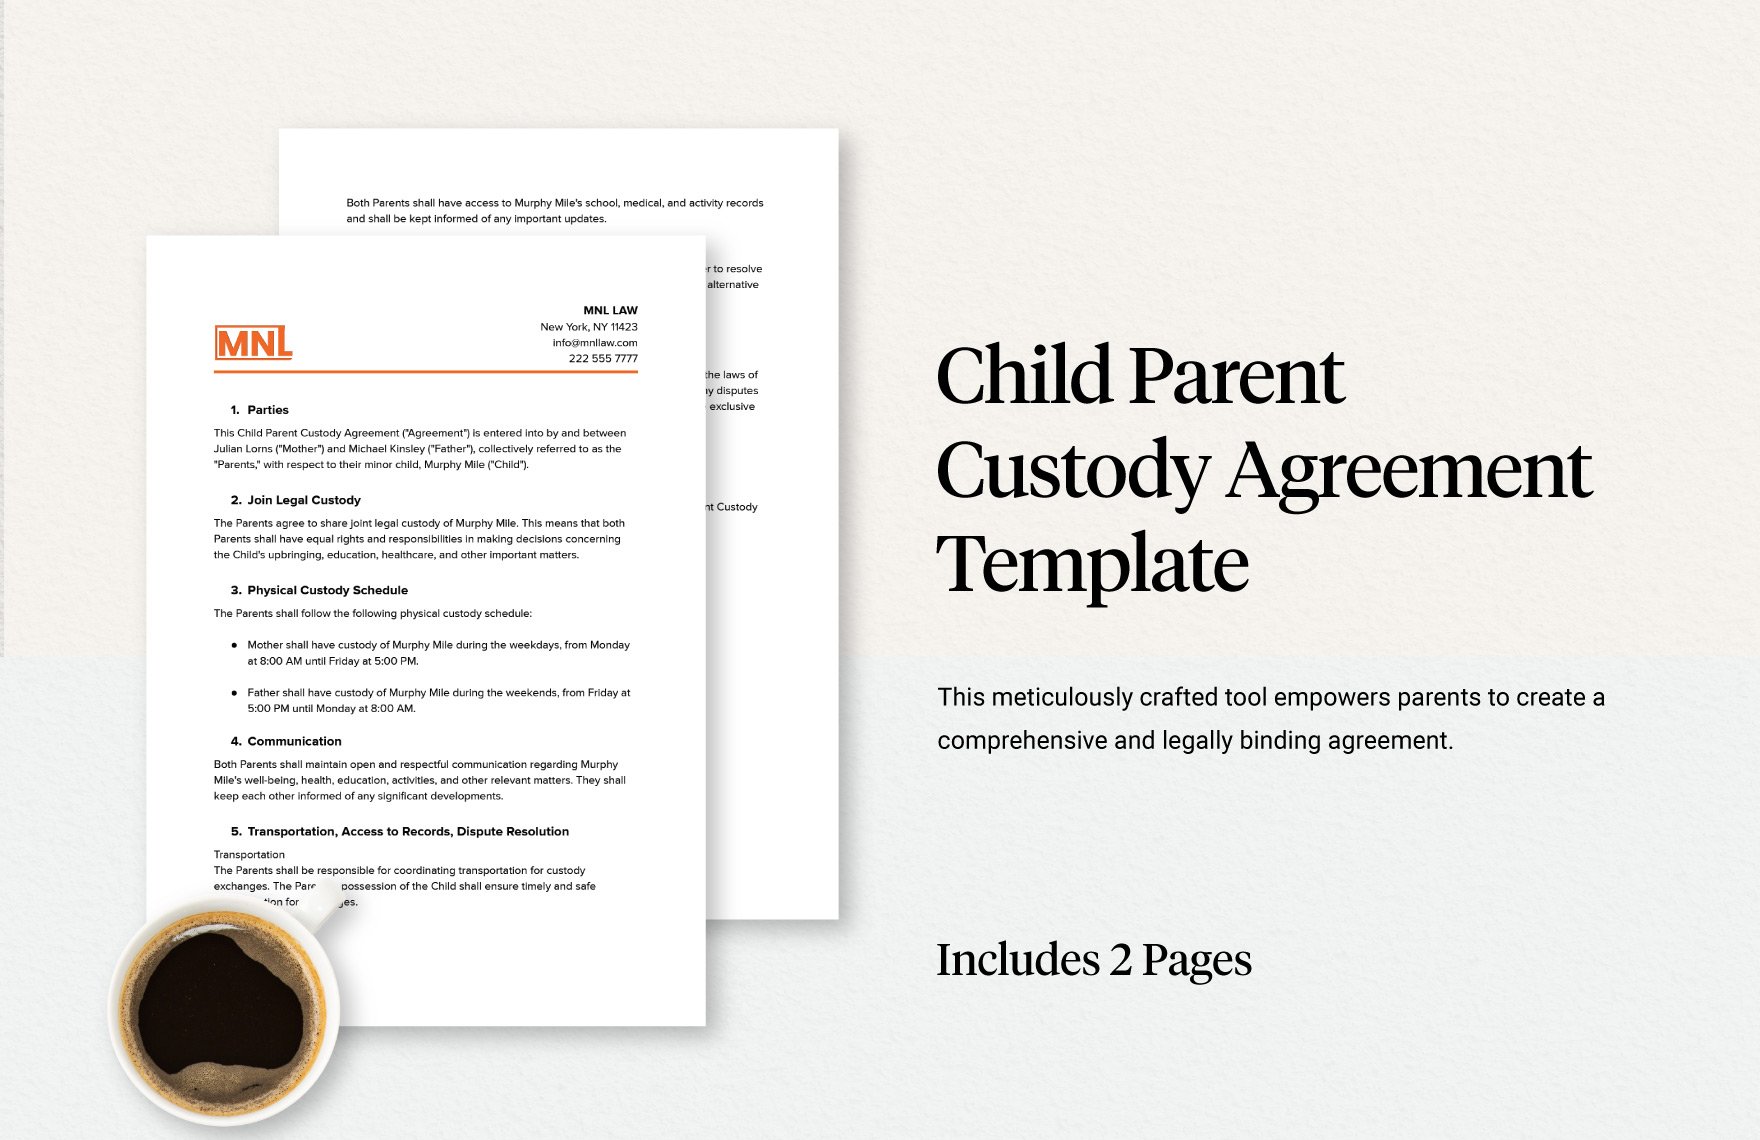 Child Parent Custody Agreement Template